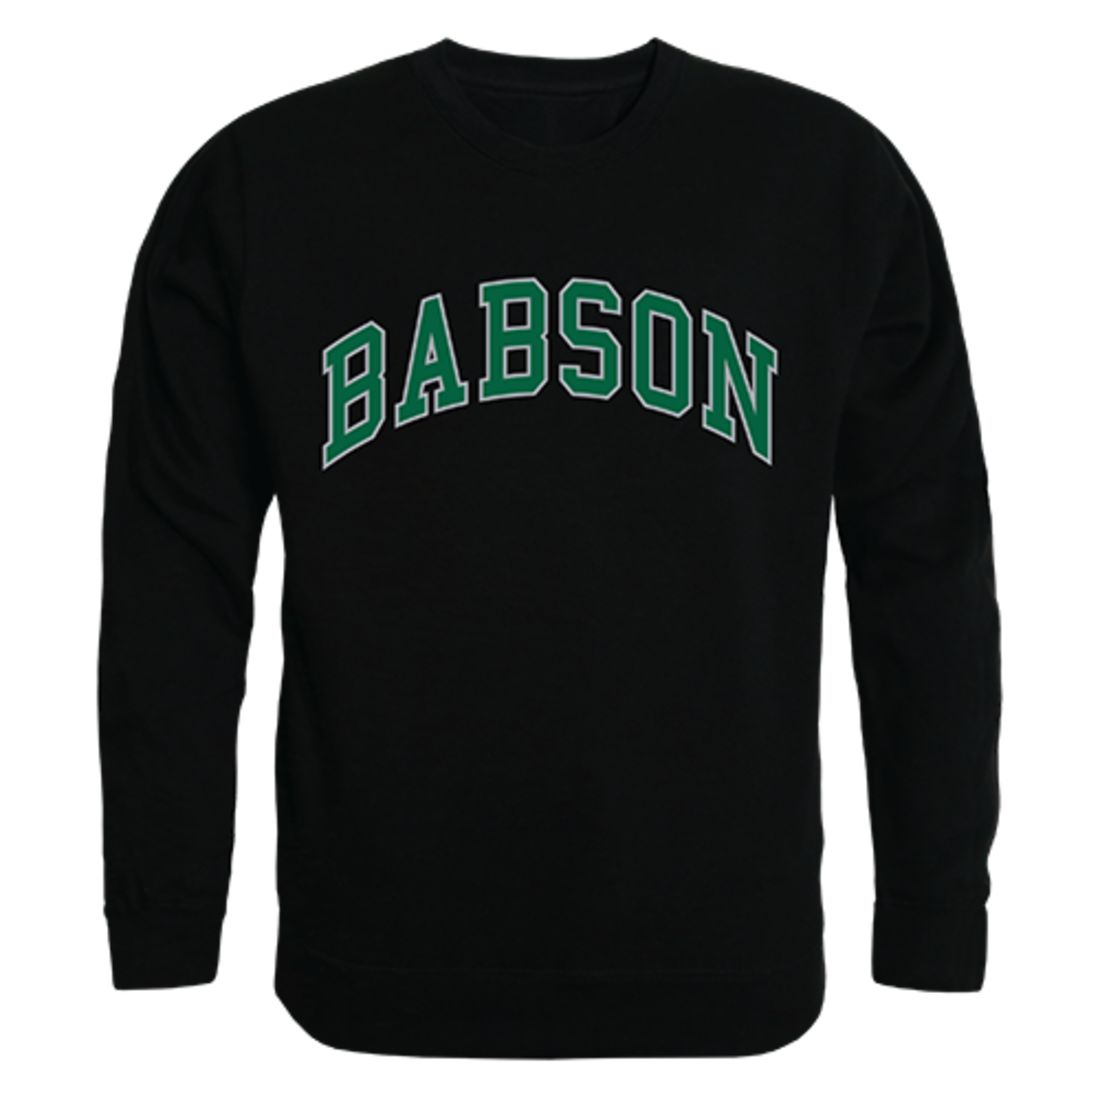 Babson College Campus Crewneck Pullover Sweatshirt Sweater Black-Campus-Wardrobe